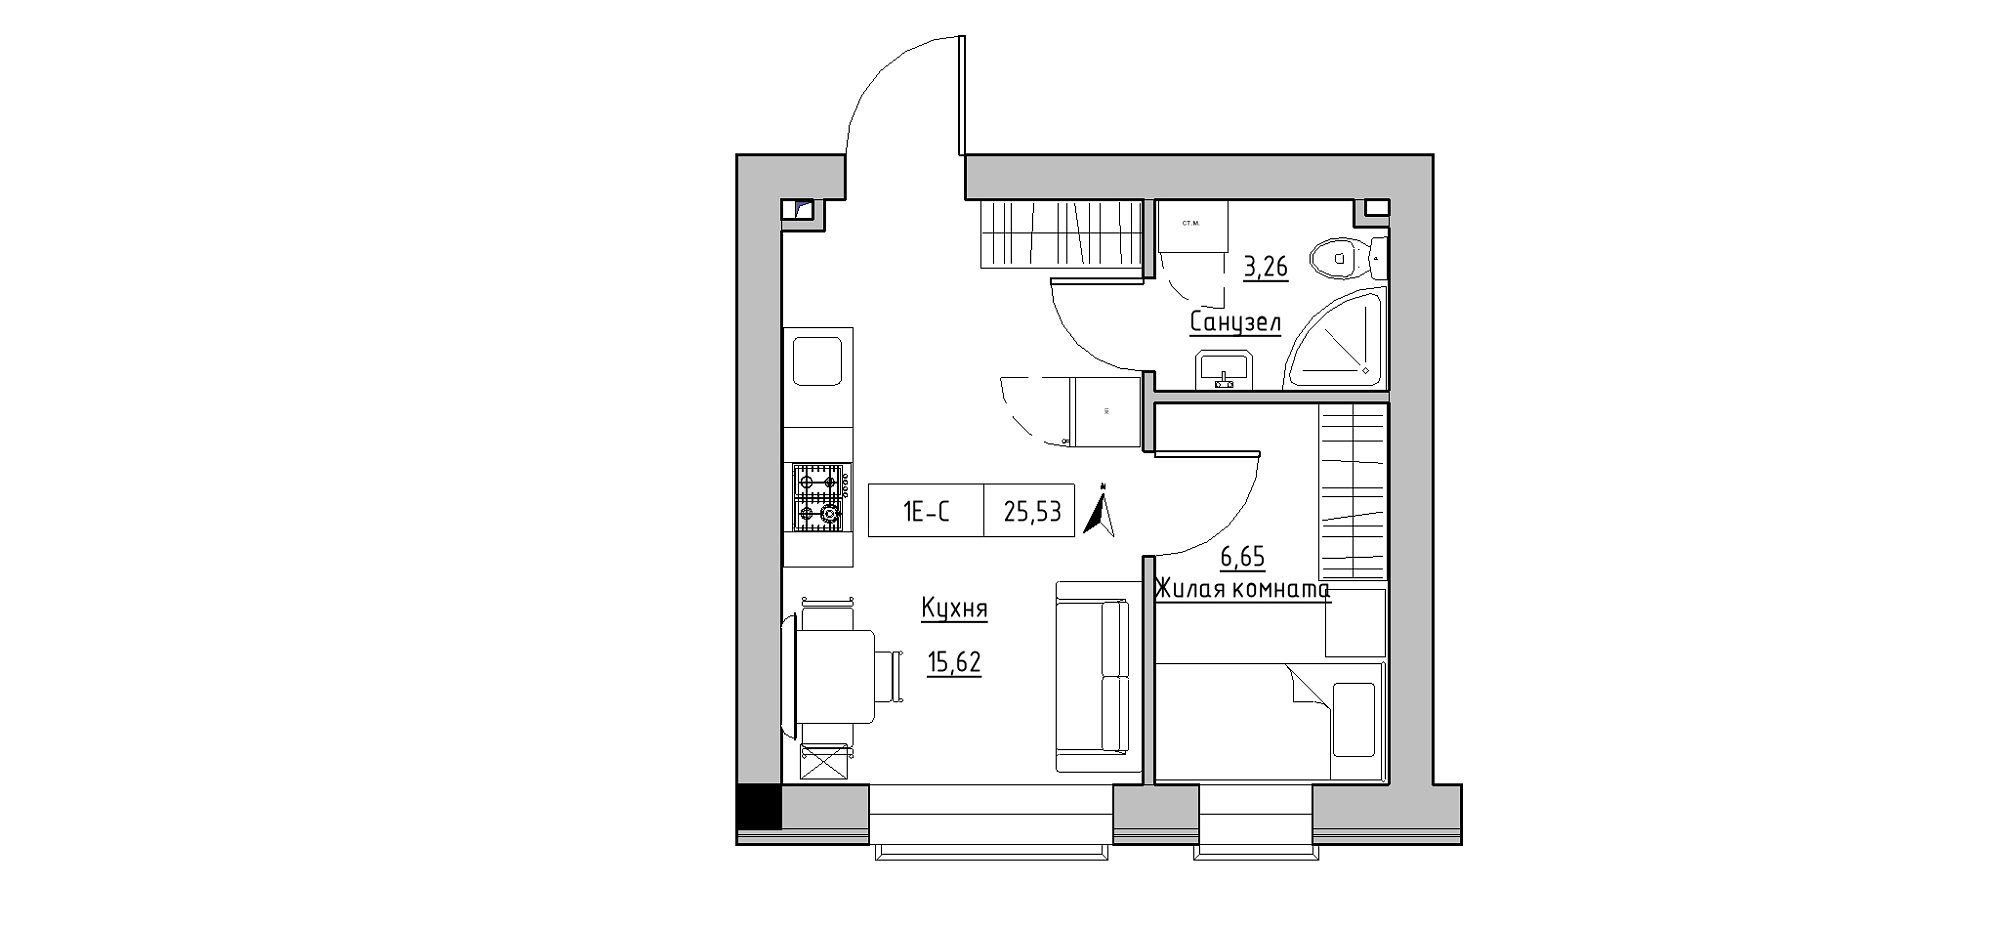 Planning 1-rm flats area 25.53m2, KS-020-05/0004.